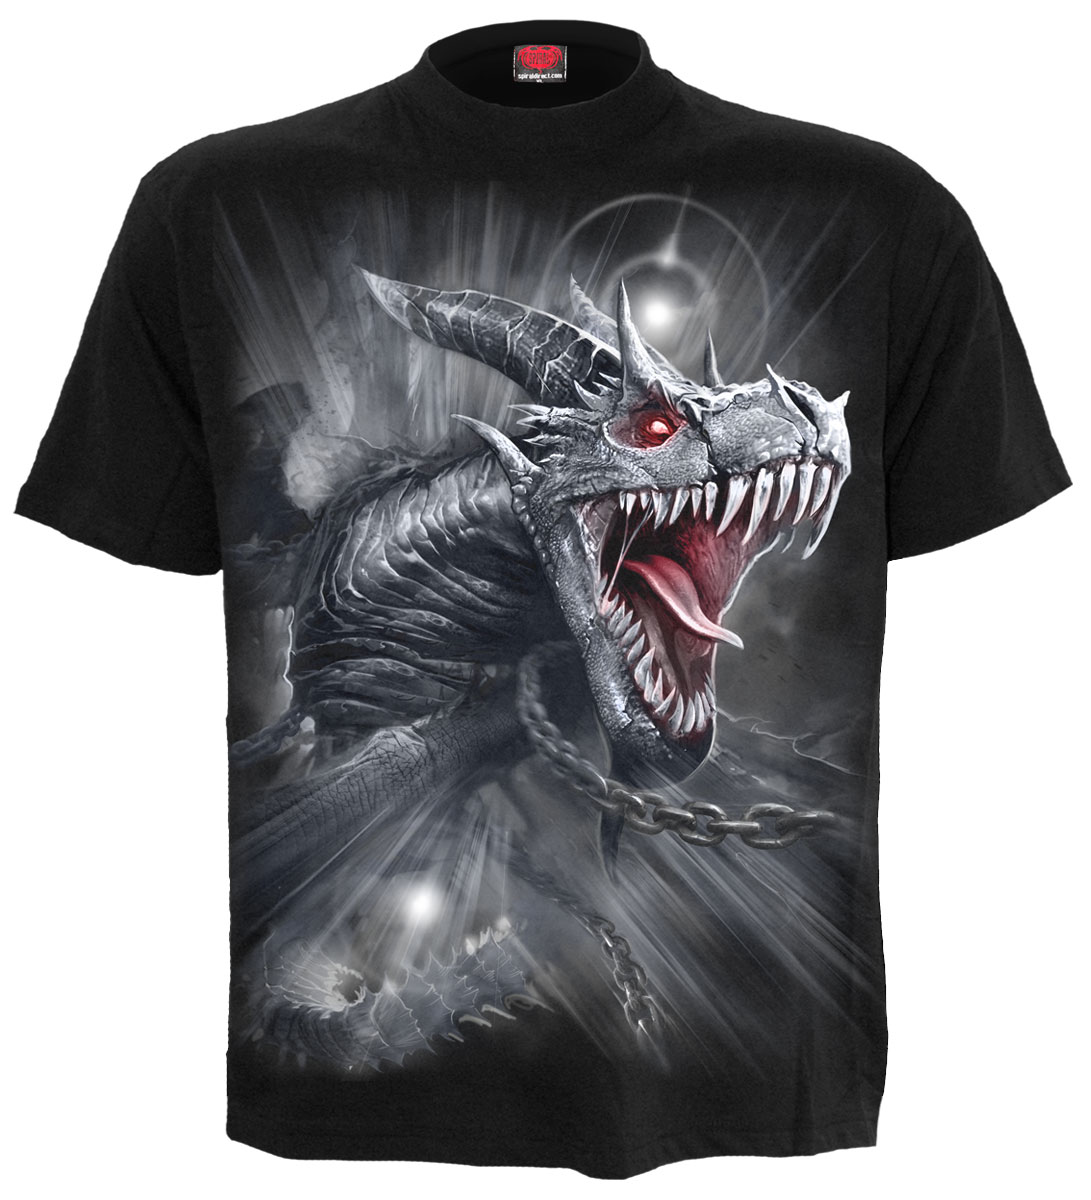 spiral t-shirts,cotton dragon t-shirts,black t-shirts,wings t-shirts,black mystical t-shirts